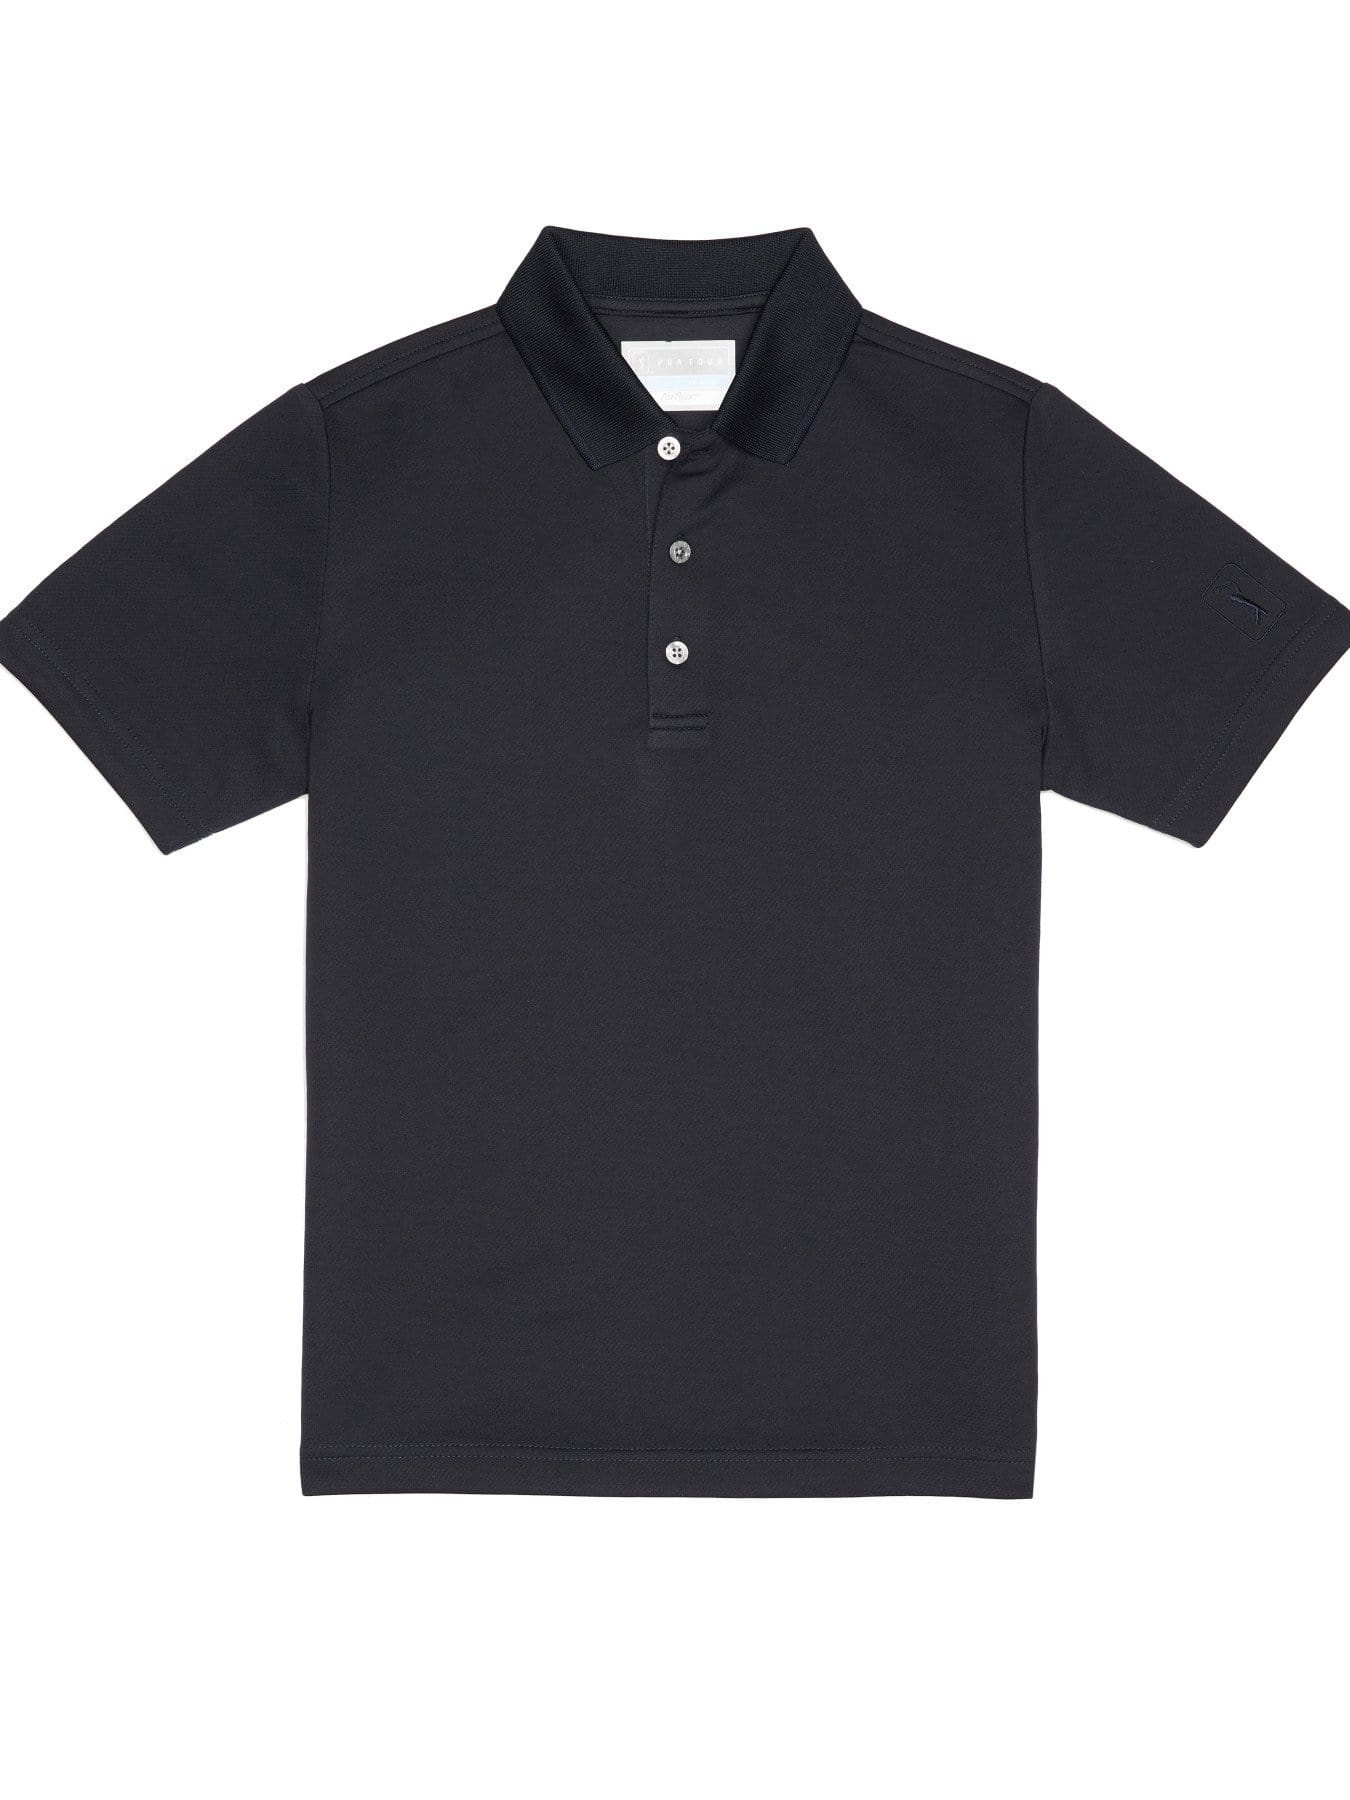 PGA TOUR Apparel Boys Short Sleeve AirFlux™ Polo Shirt, Size XL, True Navy Blue, 100% Polyester | Golf Apparel Shop